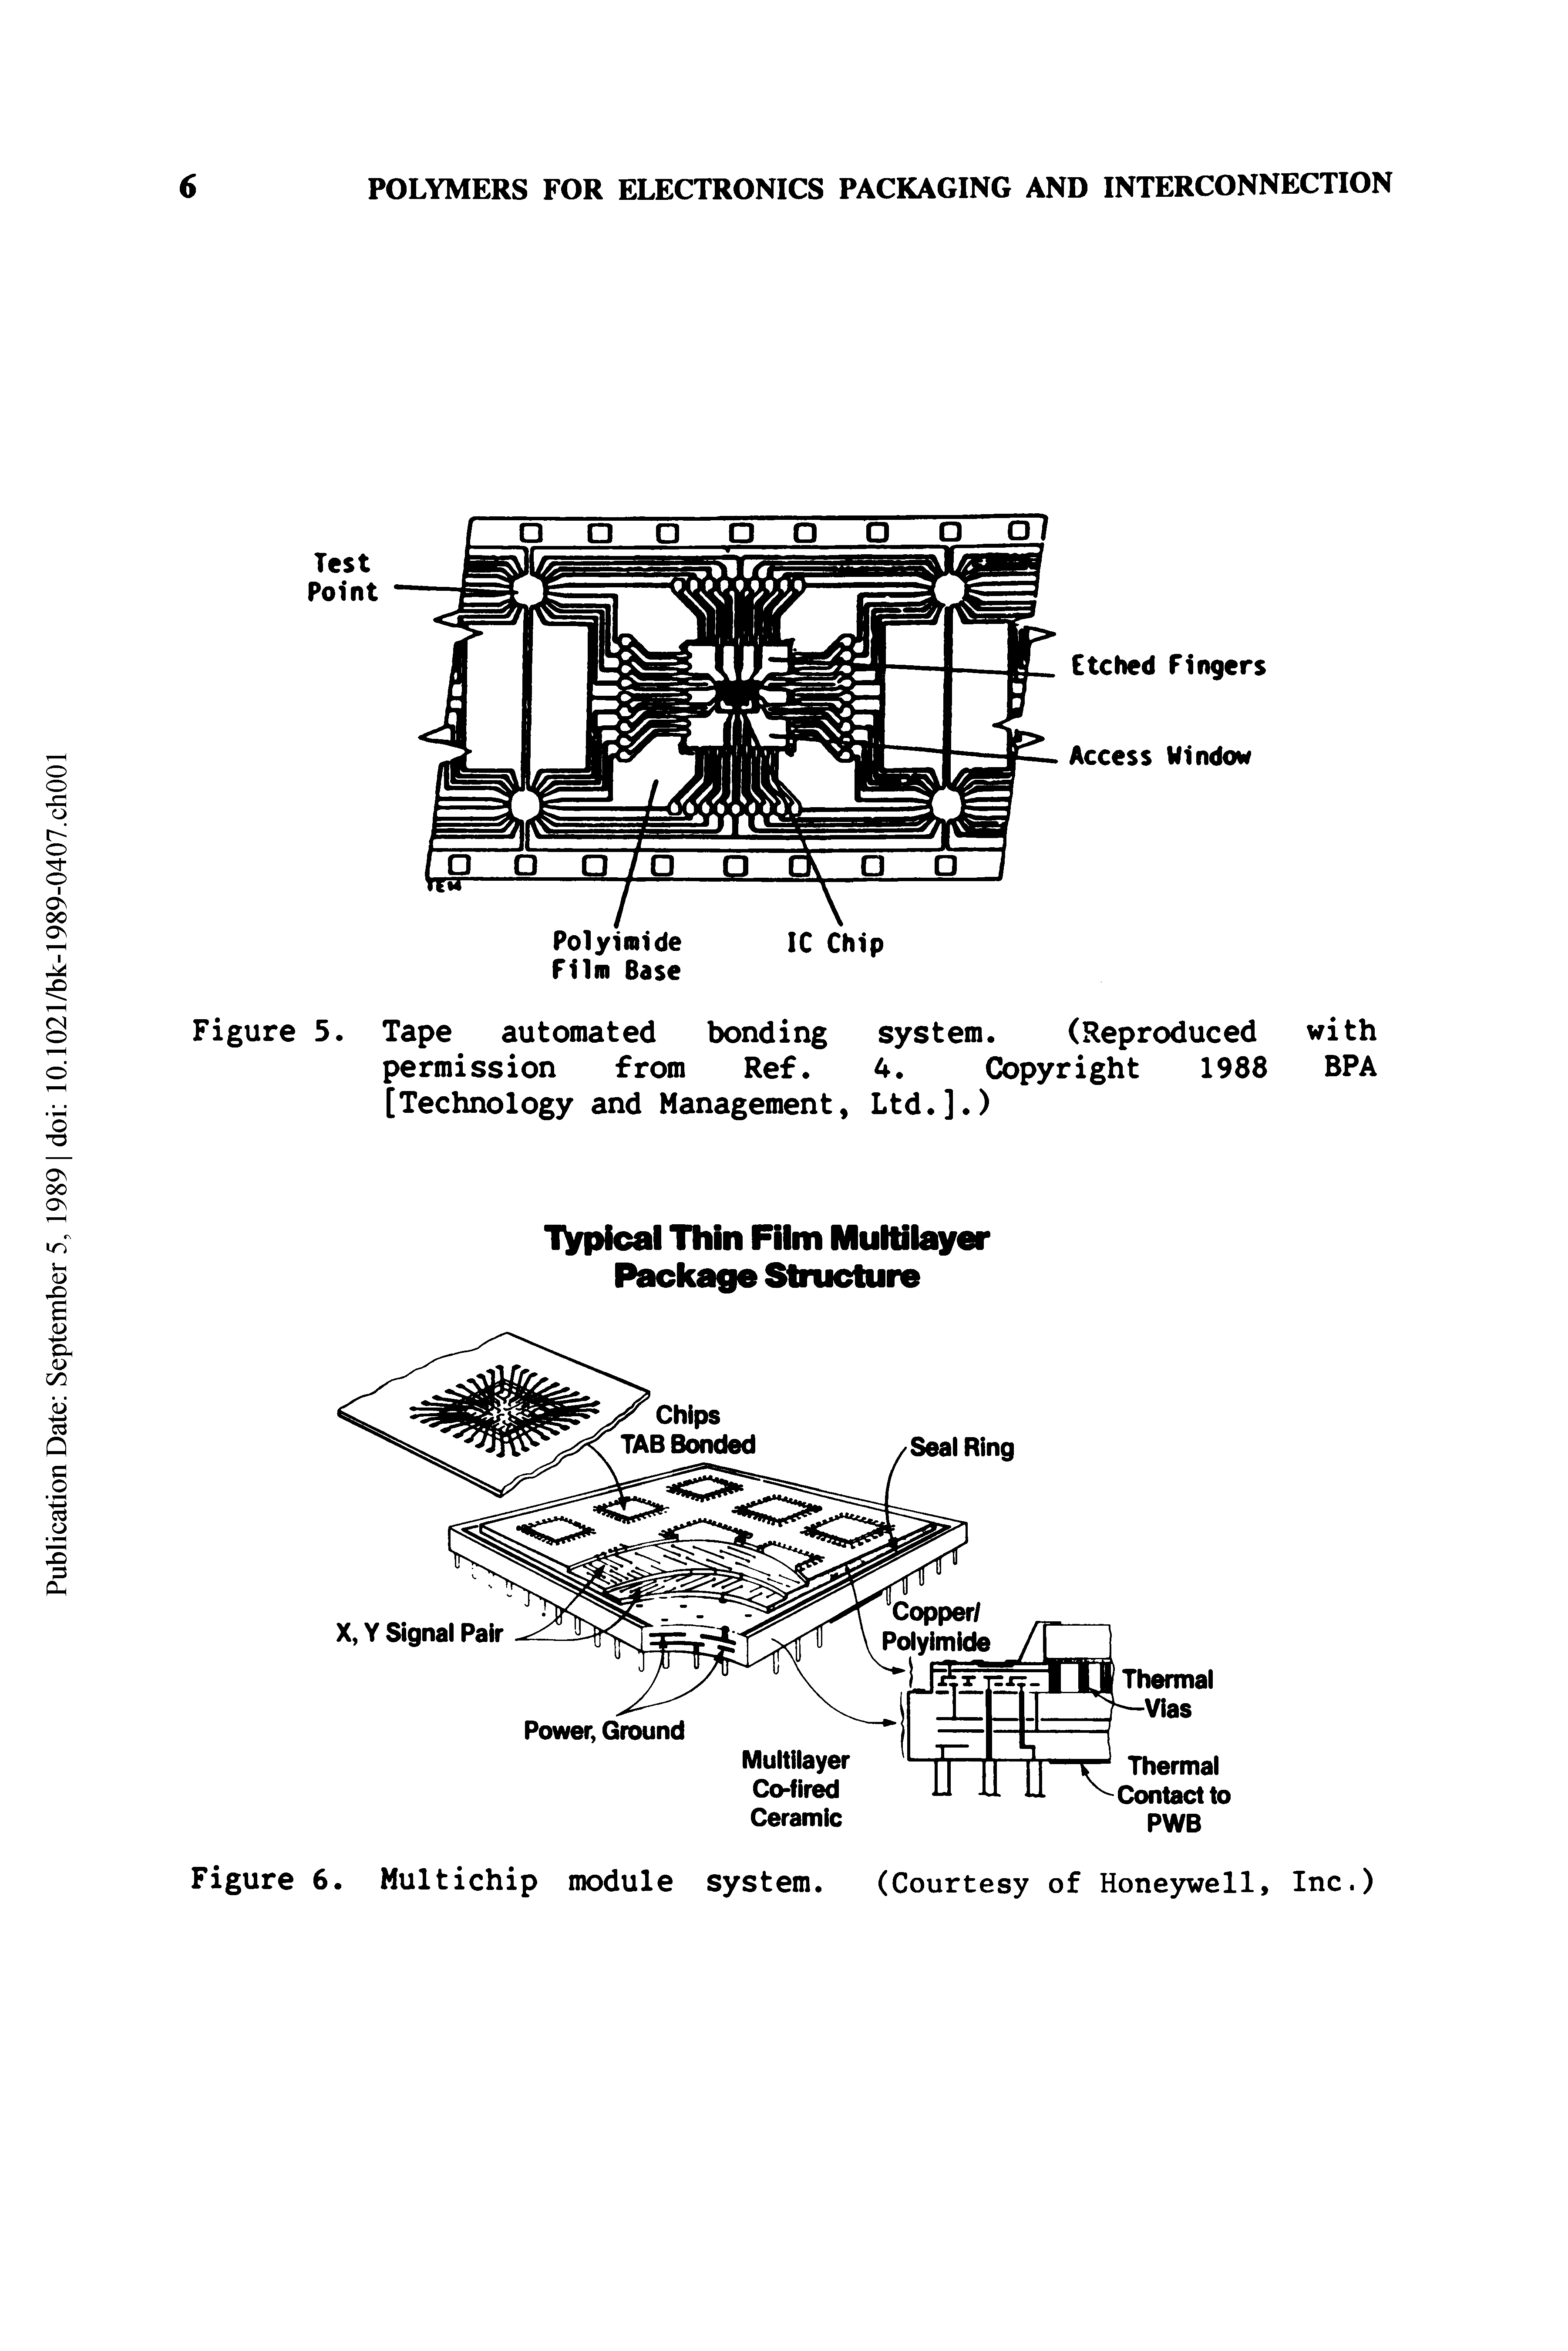 Figure 6. Multichip module system. (Courtesy of Honeywell, Inc.)...